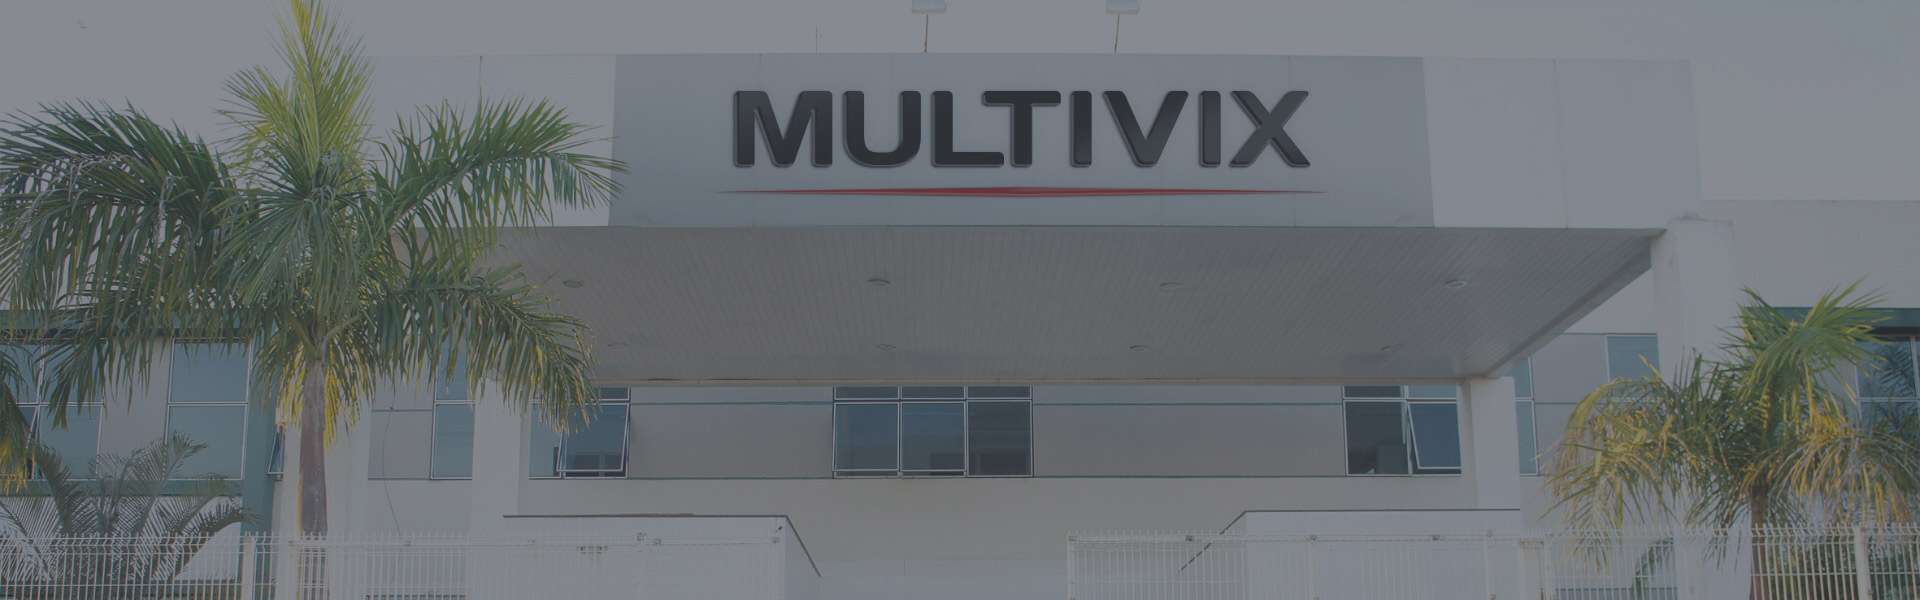 Multivix São Mateus